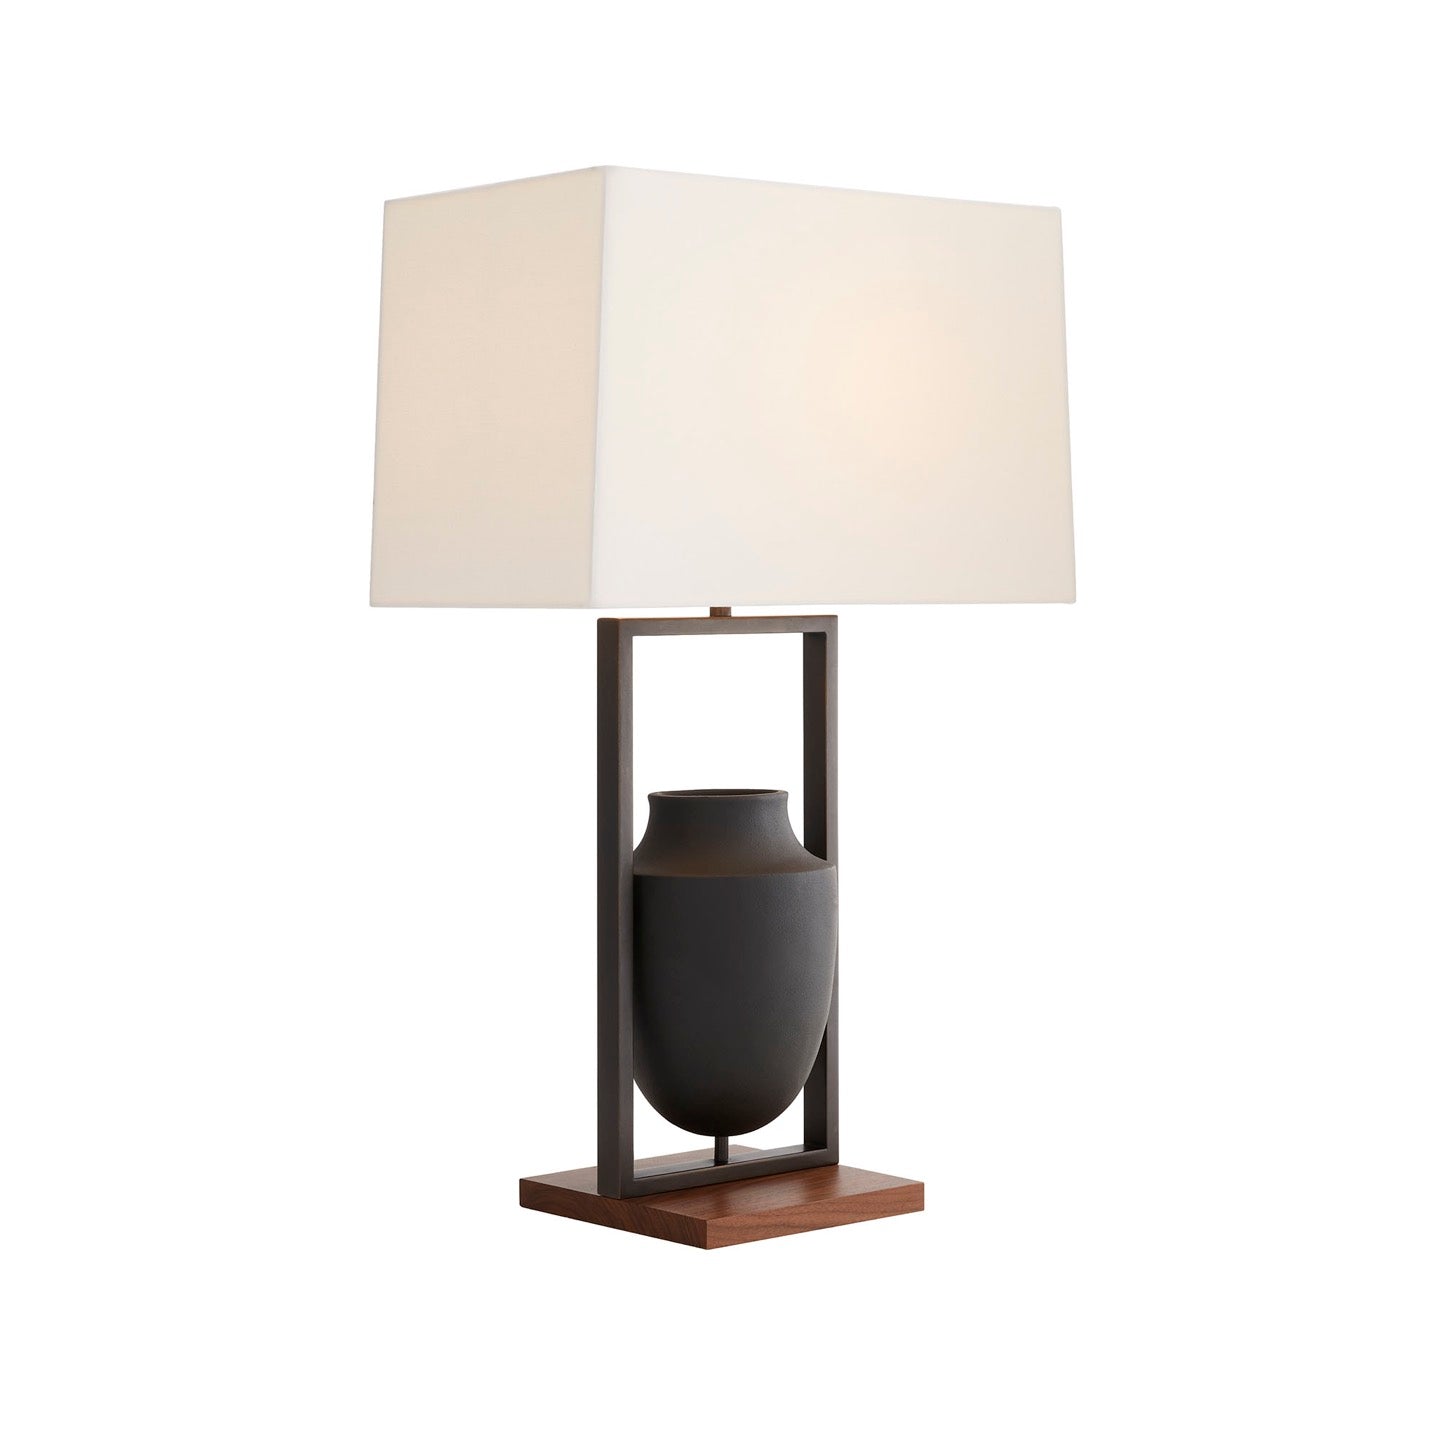 Foundry Lamp